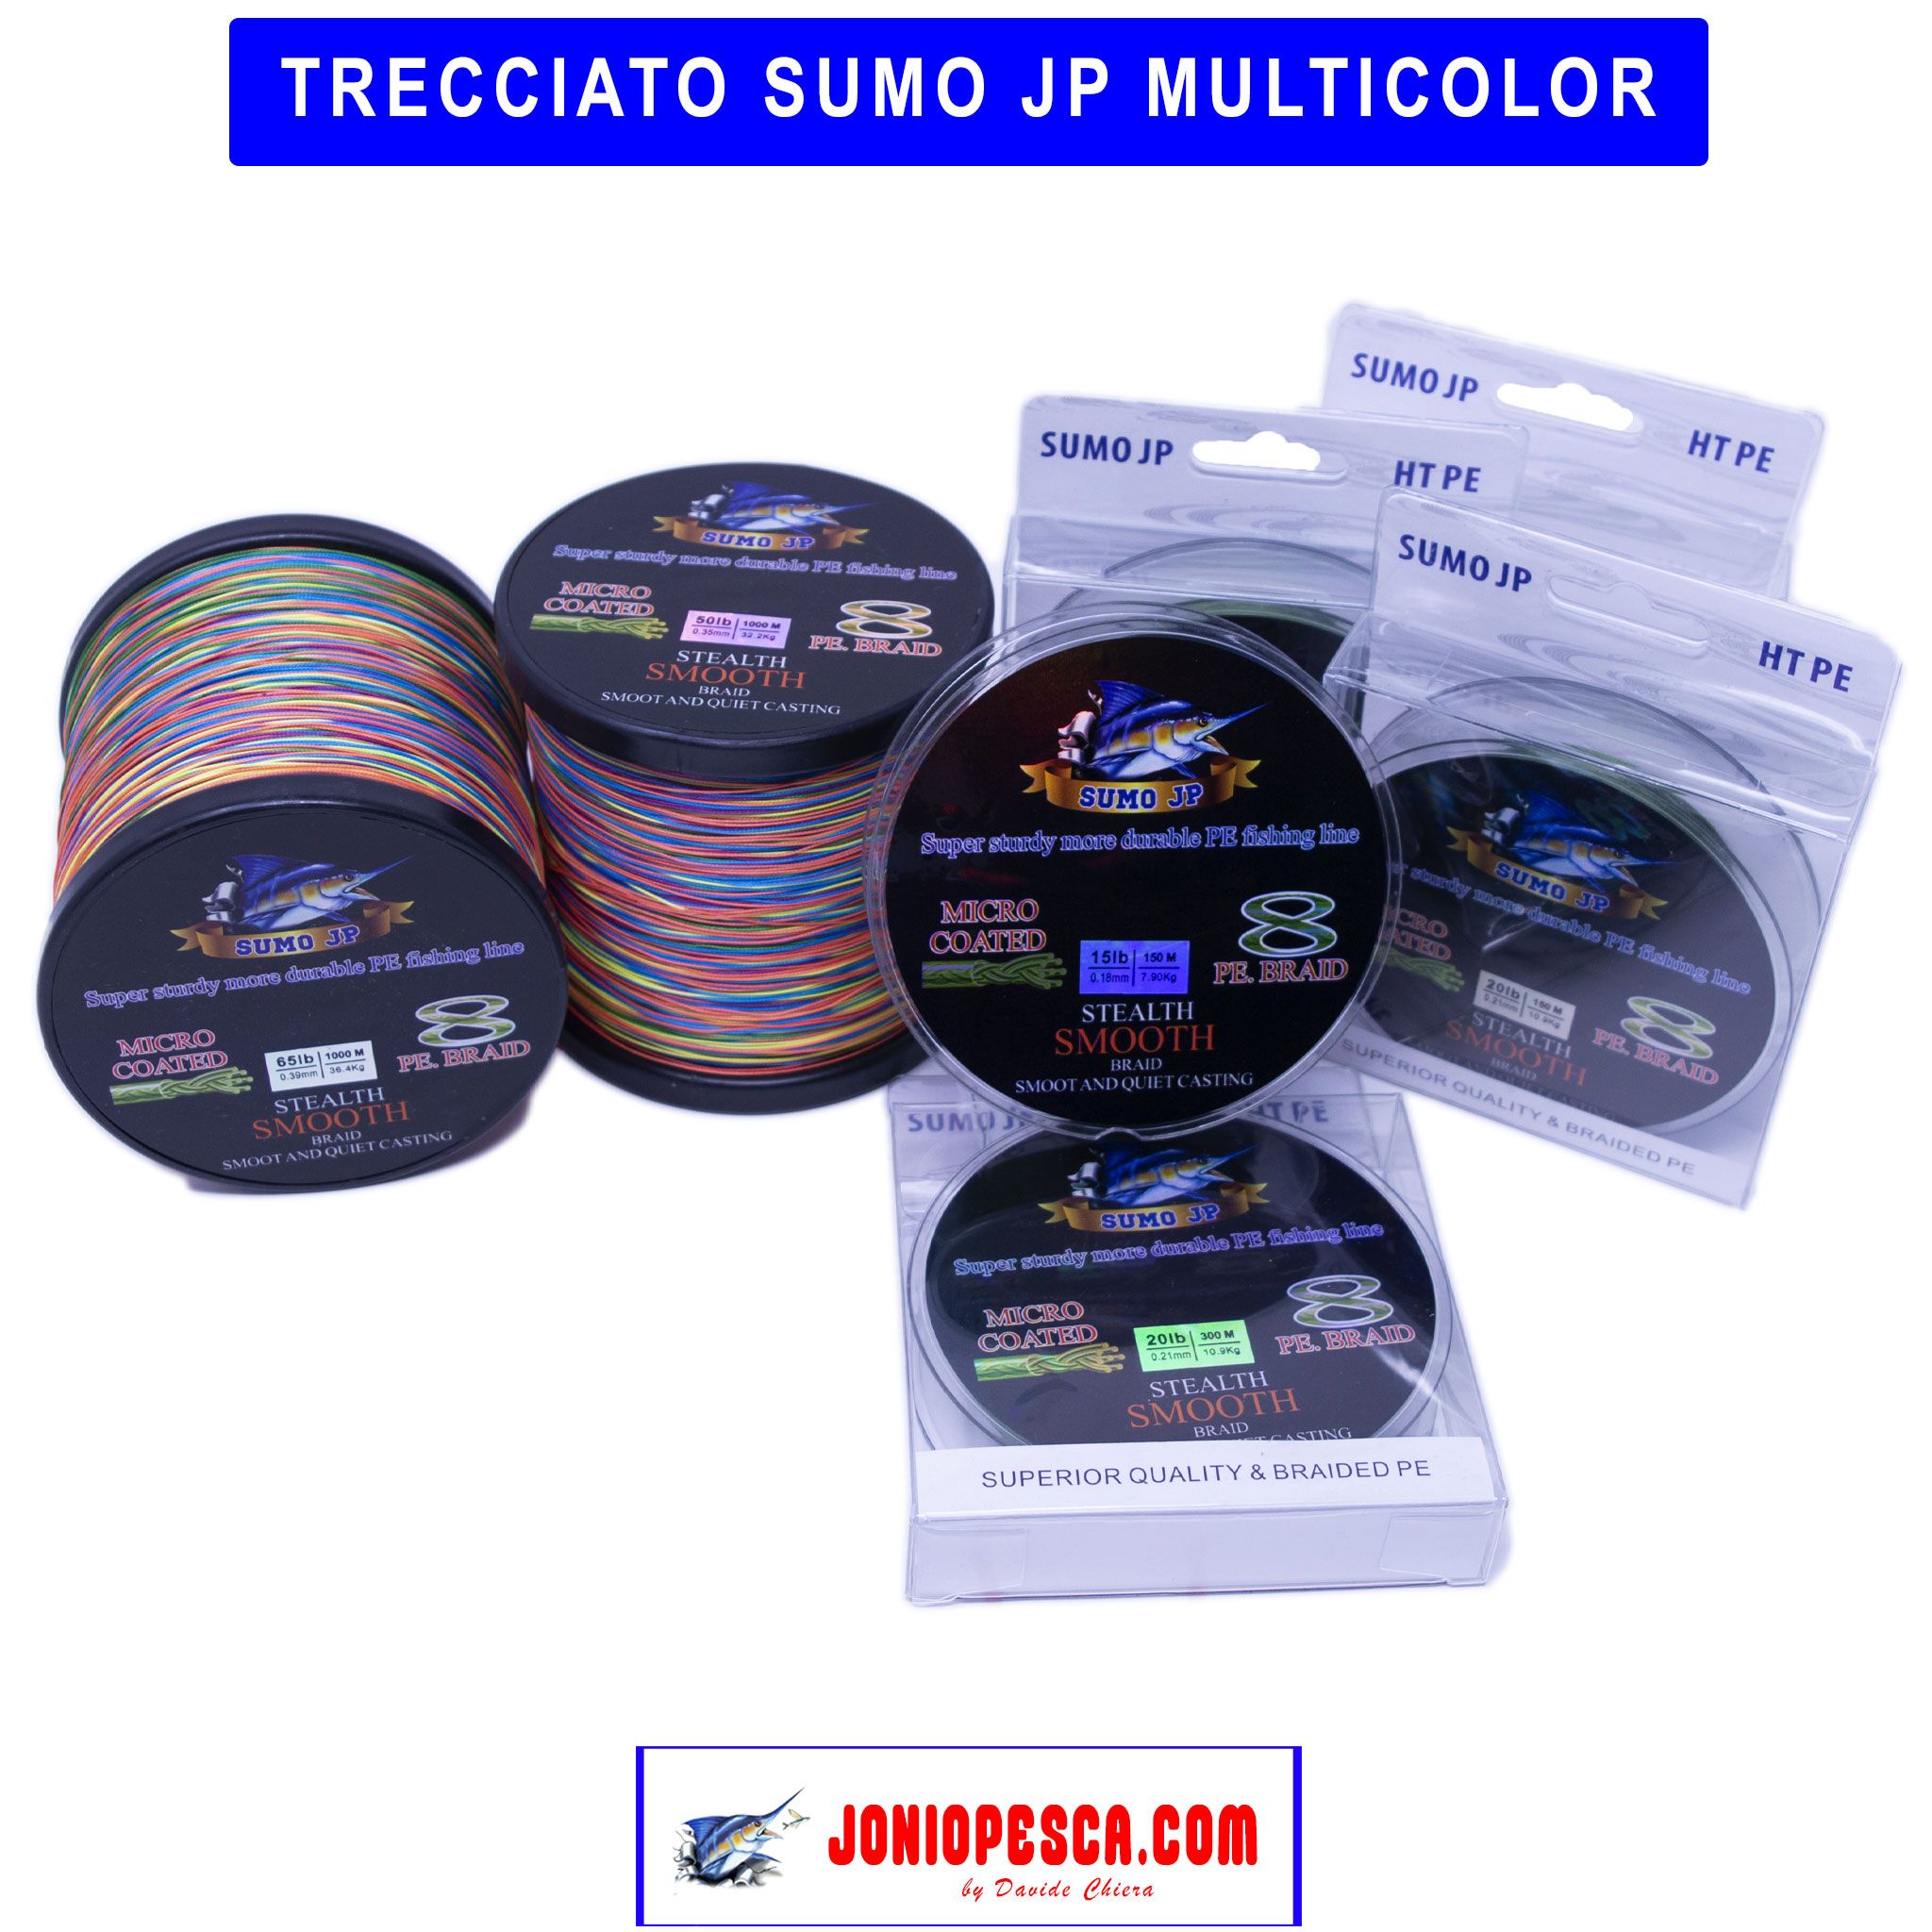 trecciato-sumo-jp-multicolor-2